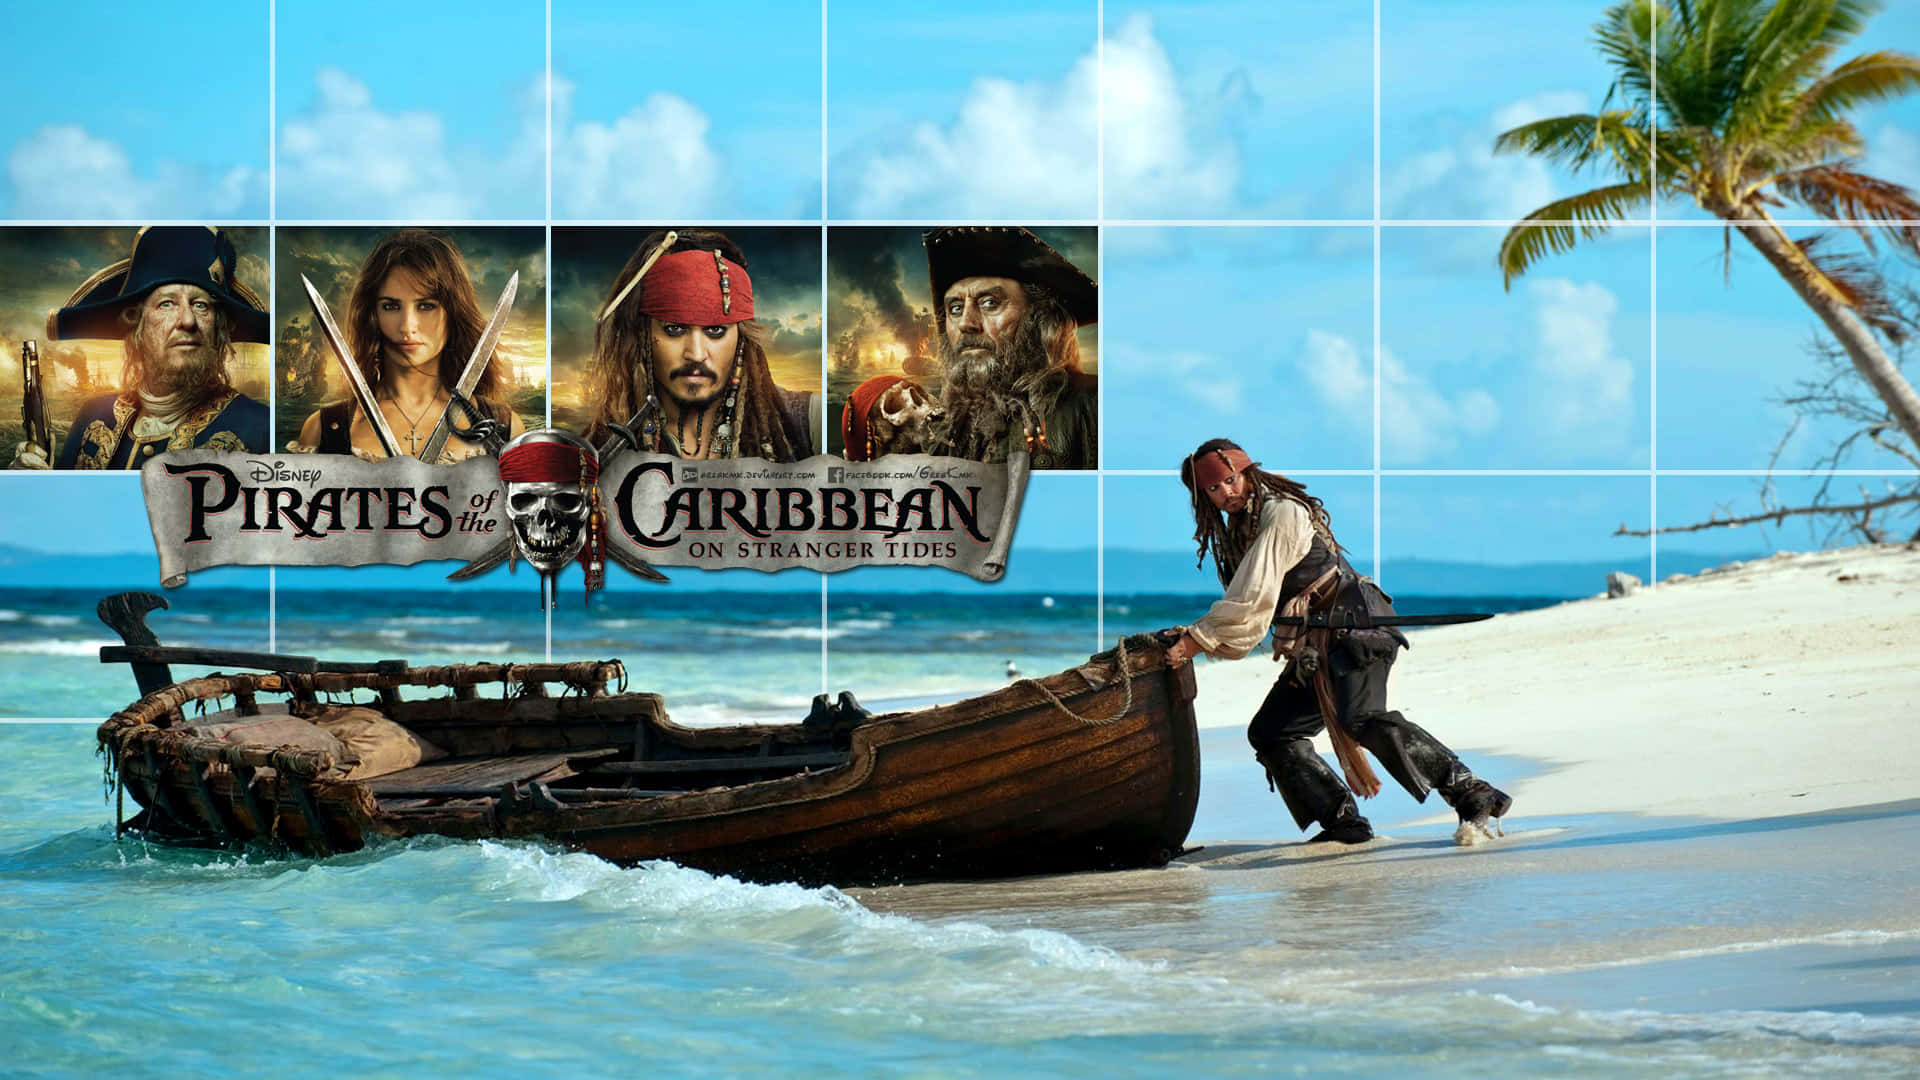 Captain Jack Sparrow setting sail on his unforgettable voyage